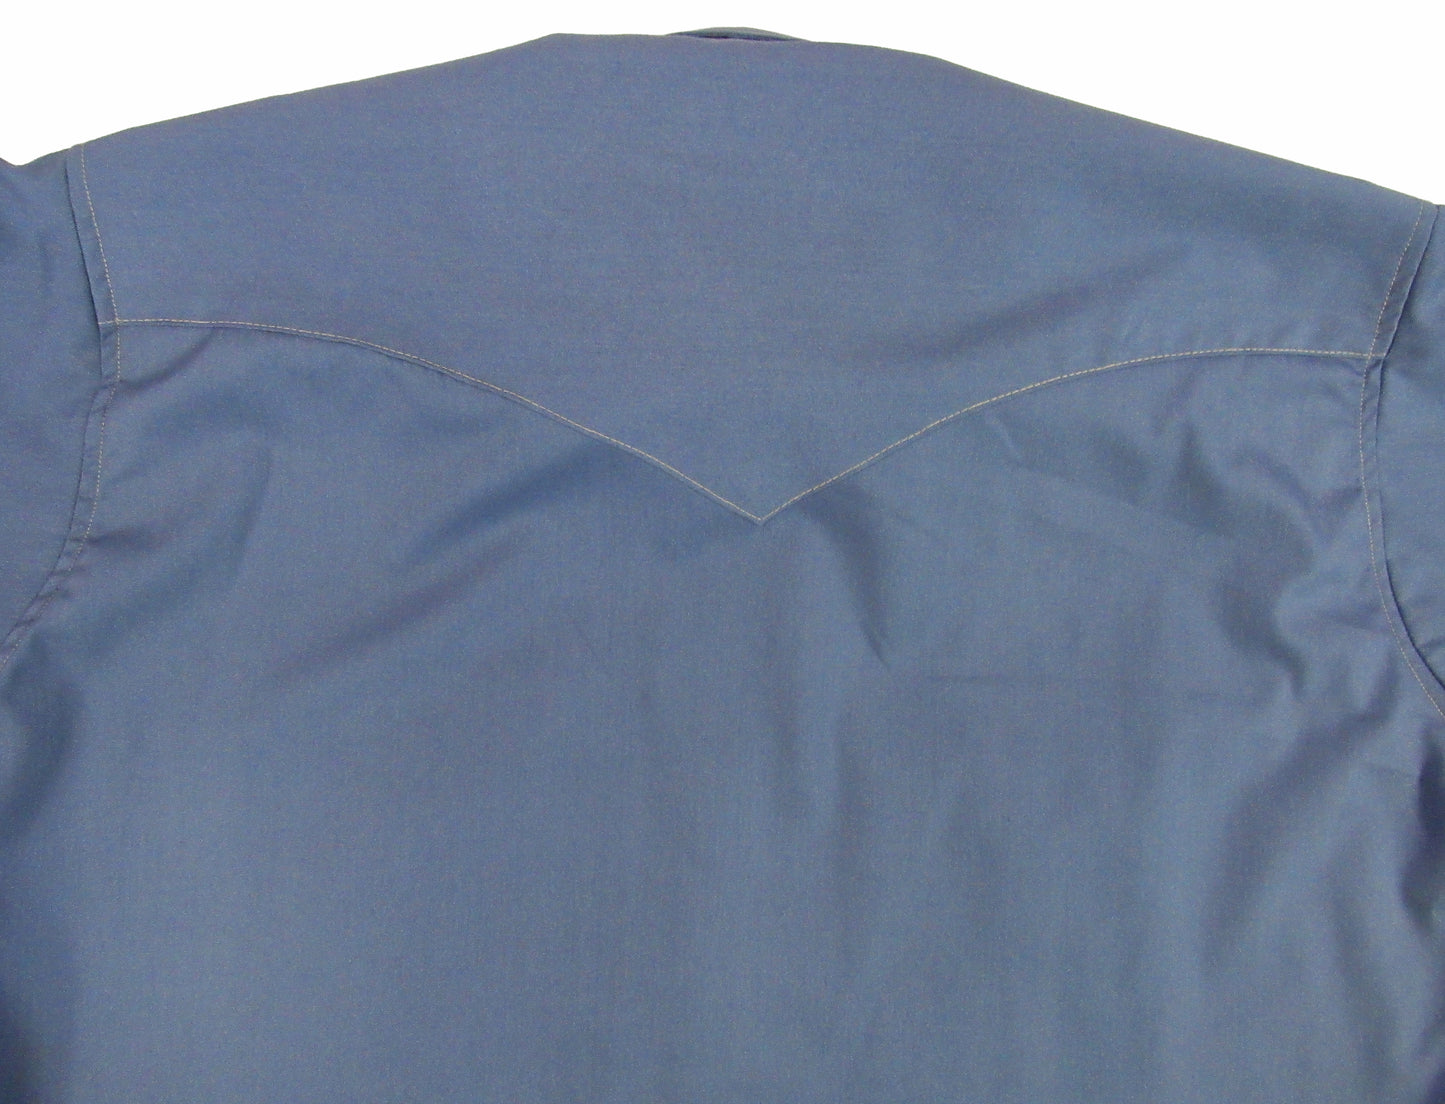 Flying R Ranchwear - Blazer Solids - Cadet Blue - Long Sleeve